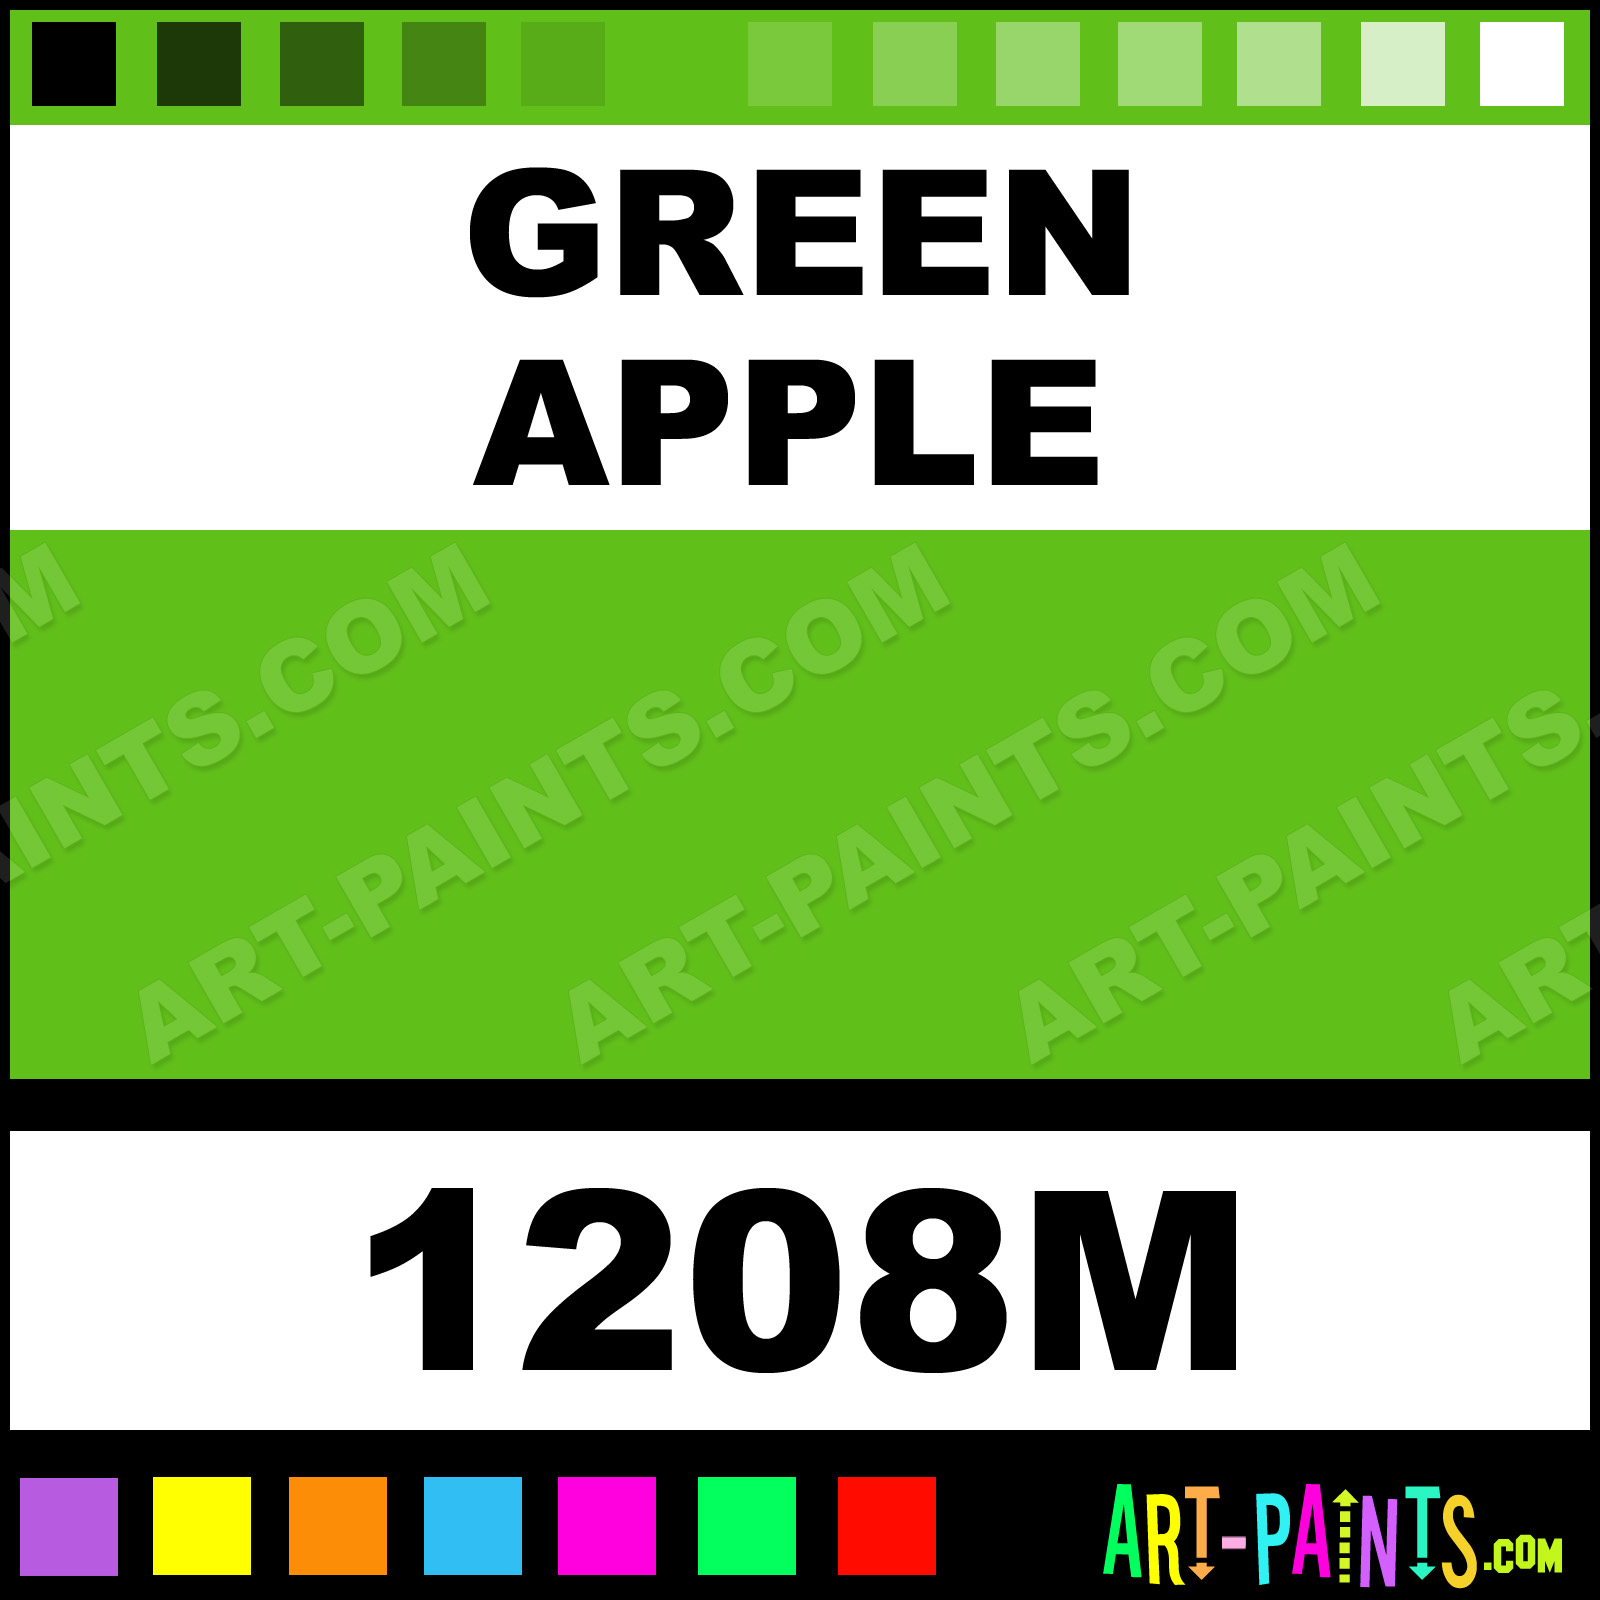 apple color code